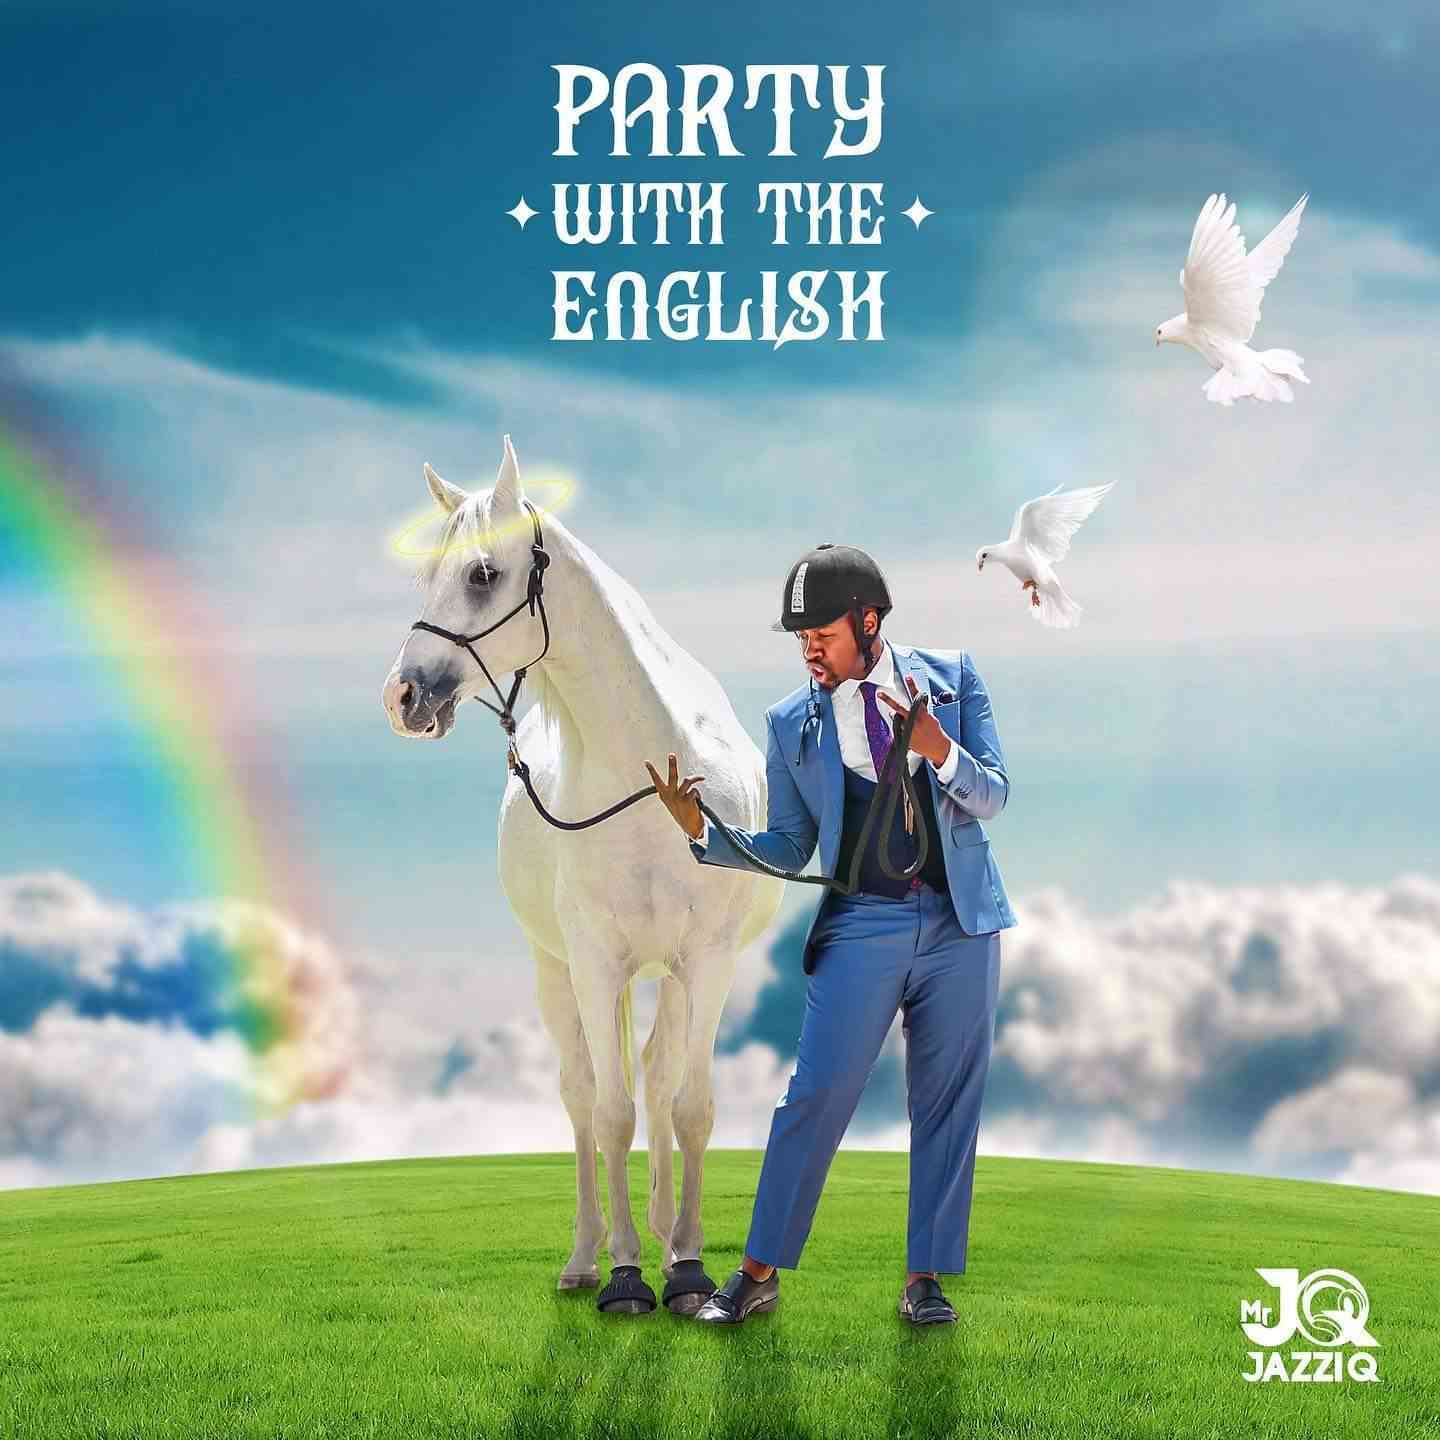 Mr JazziQ Reveals Party With The English Album + Artwork